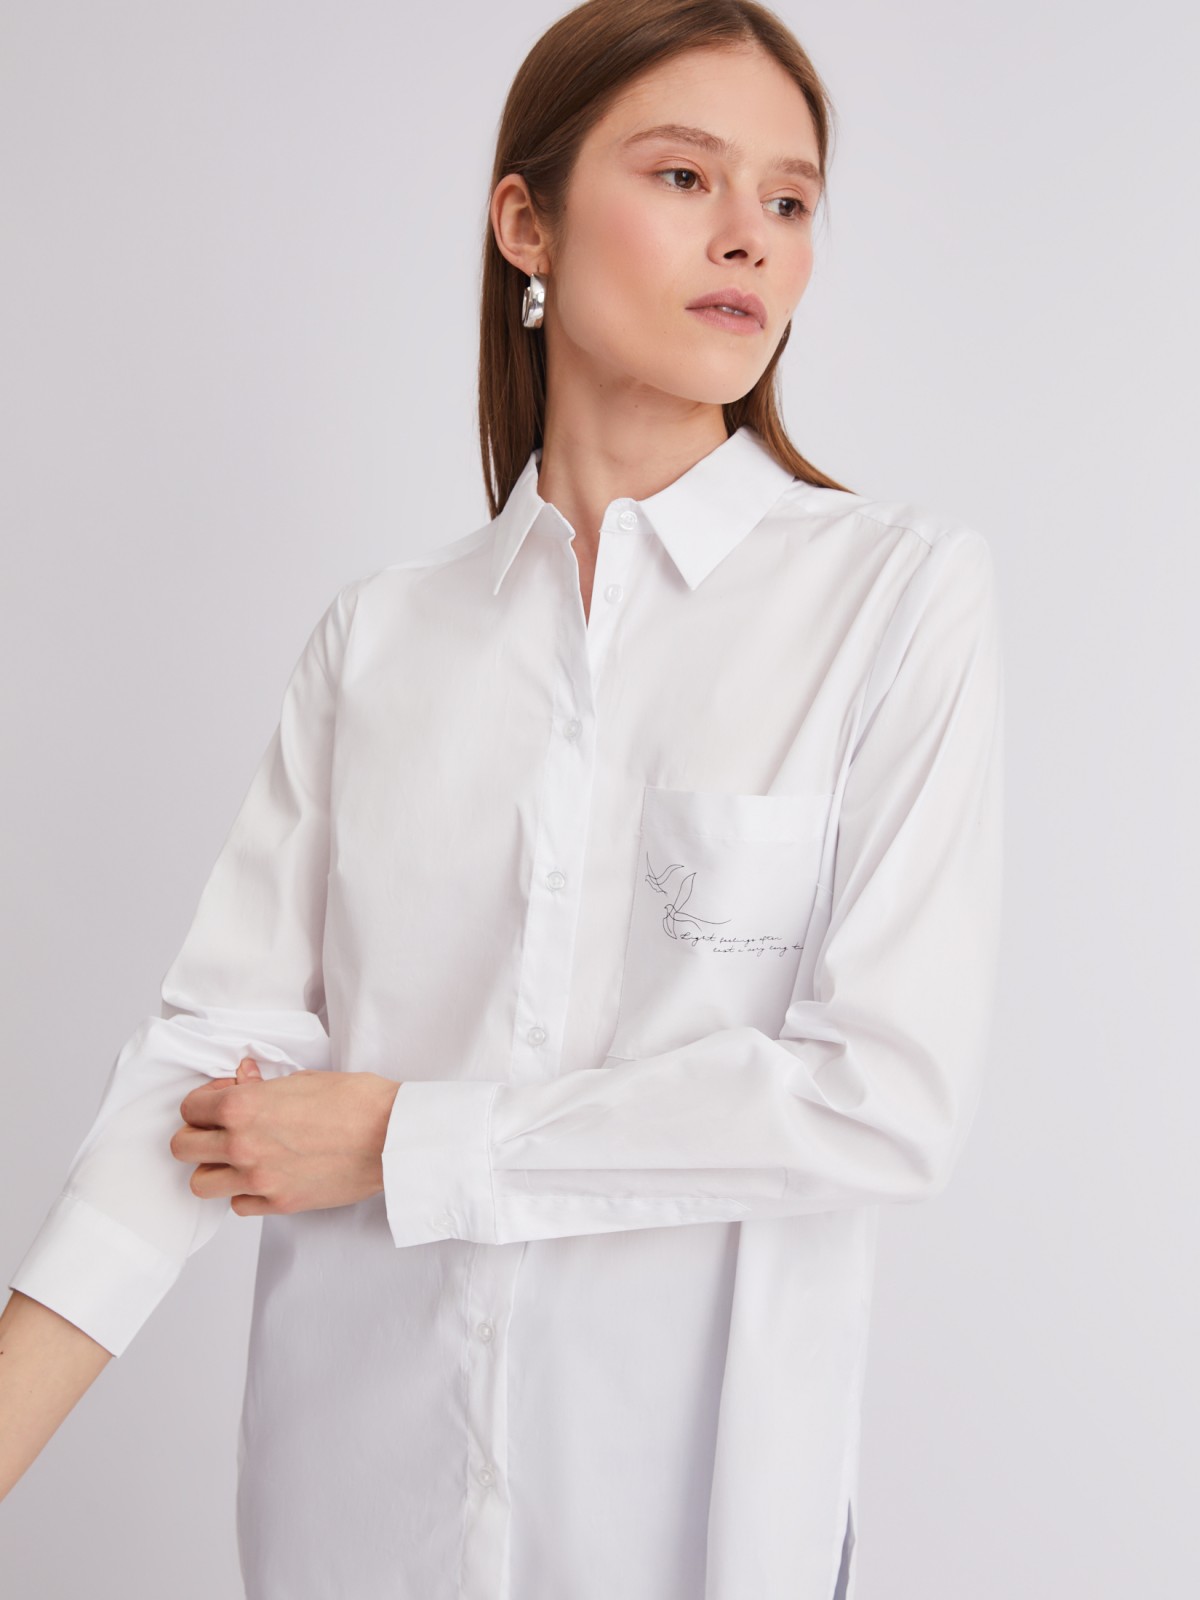 Офисная рубашка прямого силуэта с акцентом на кармане zolla 223311159042, цвет белый, размер S - фото 3